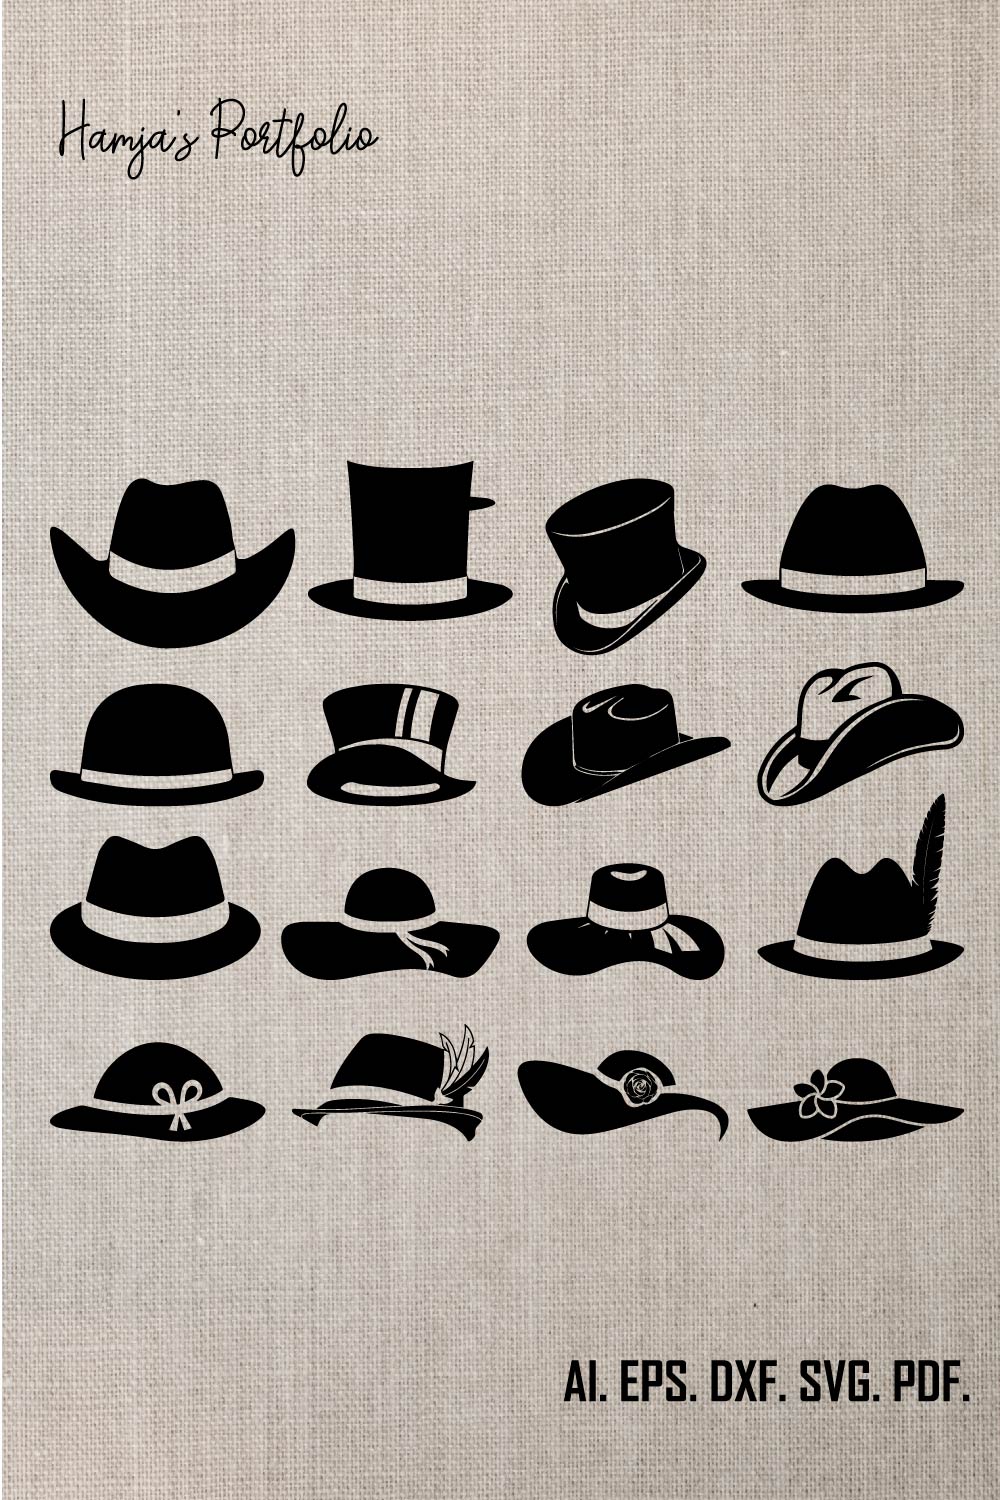 Hat Svg Bundle, Hat Clipart, Beanie Svg, Hat Png, Hat Vector, Baseball Cap Svg, Top Hat Svg, Cowboy Hat Svg, Sun Hat Svg, Cloche Hat Svg pinterest preview image.